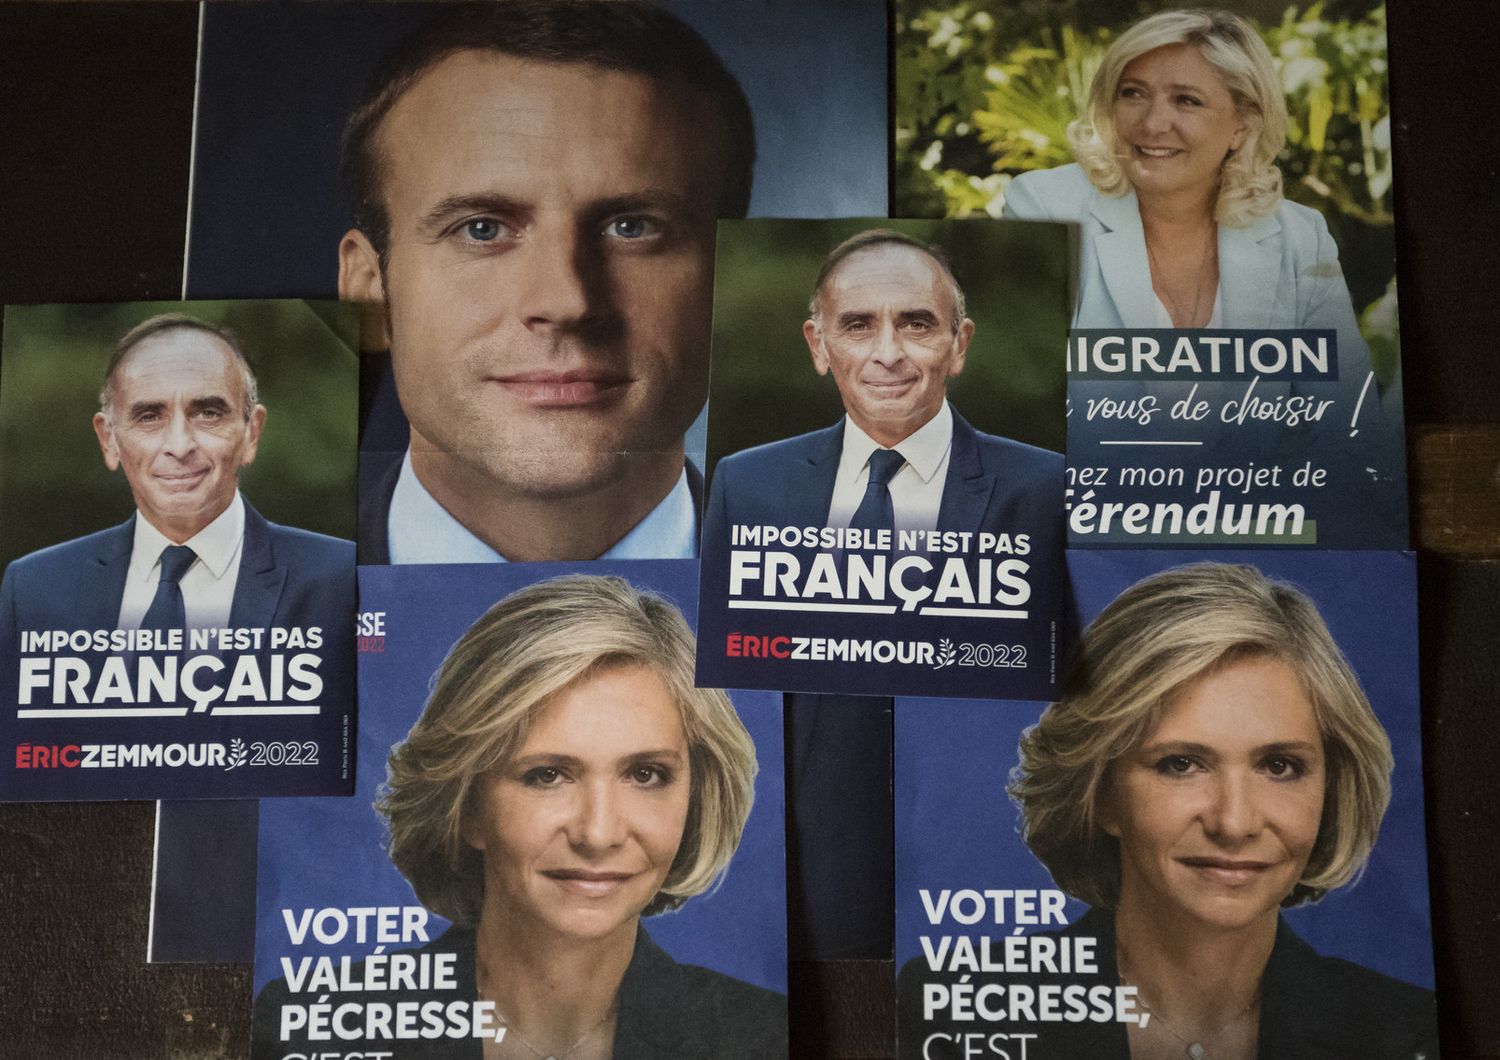 Manifesti elettorali presidenziali francesi